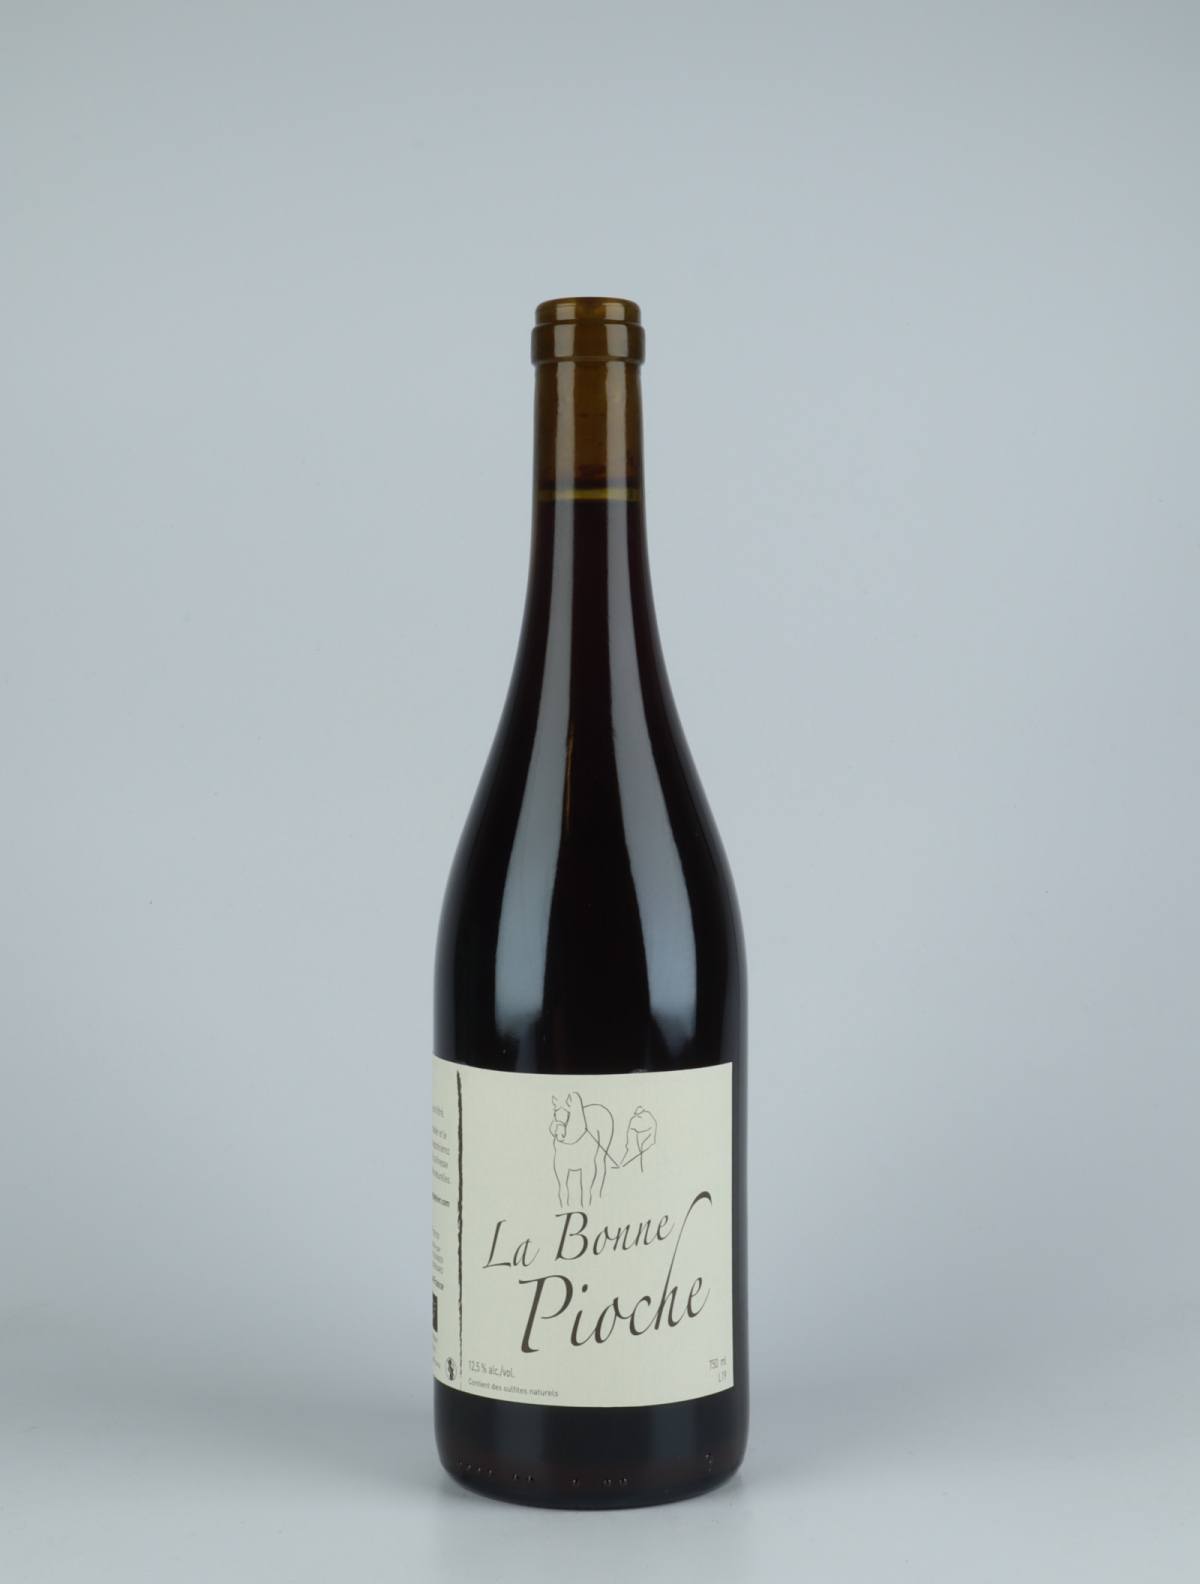 En flaske 2019 La Bonne Pioche Rødvin fra Michel Guignier, Beaujolais i Frankrig